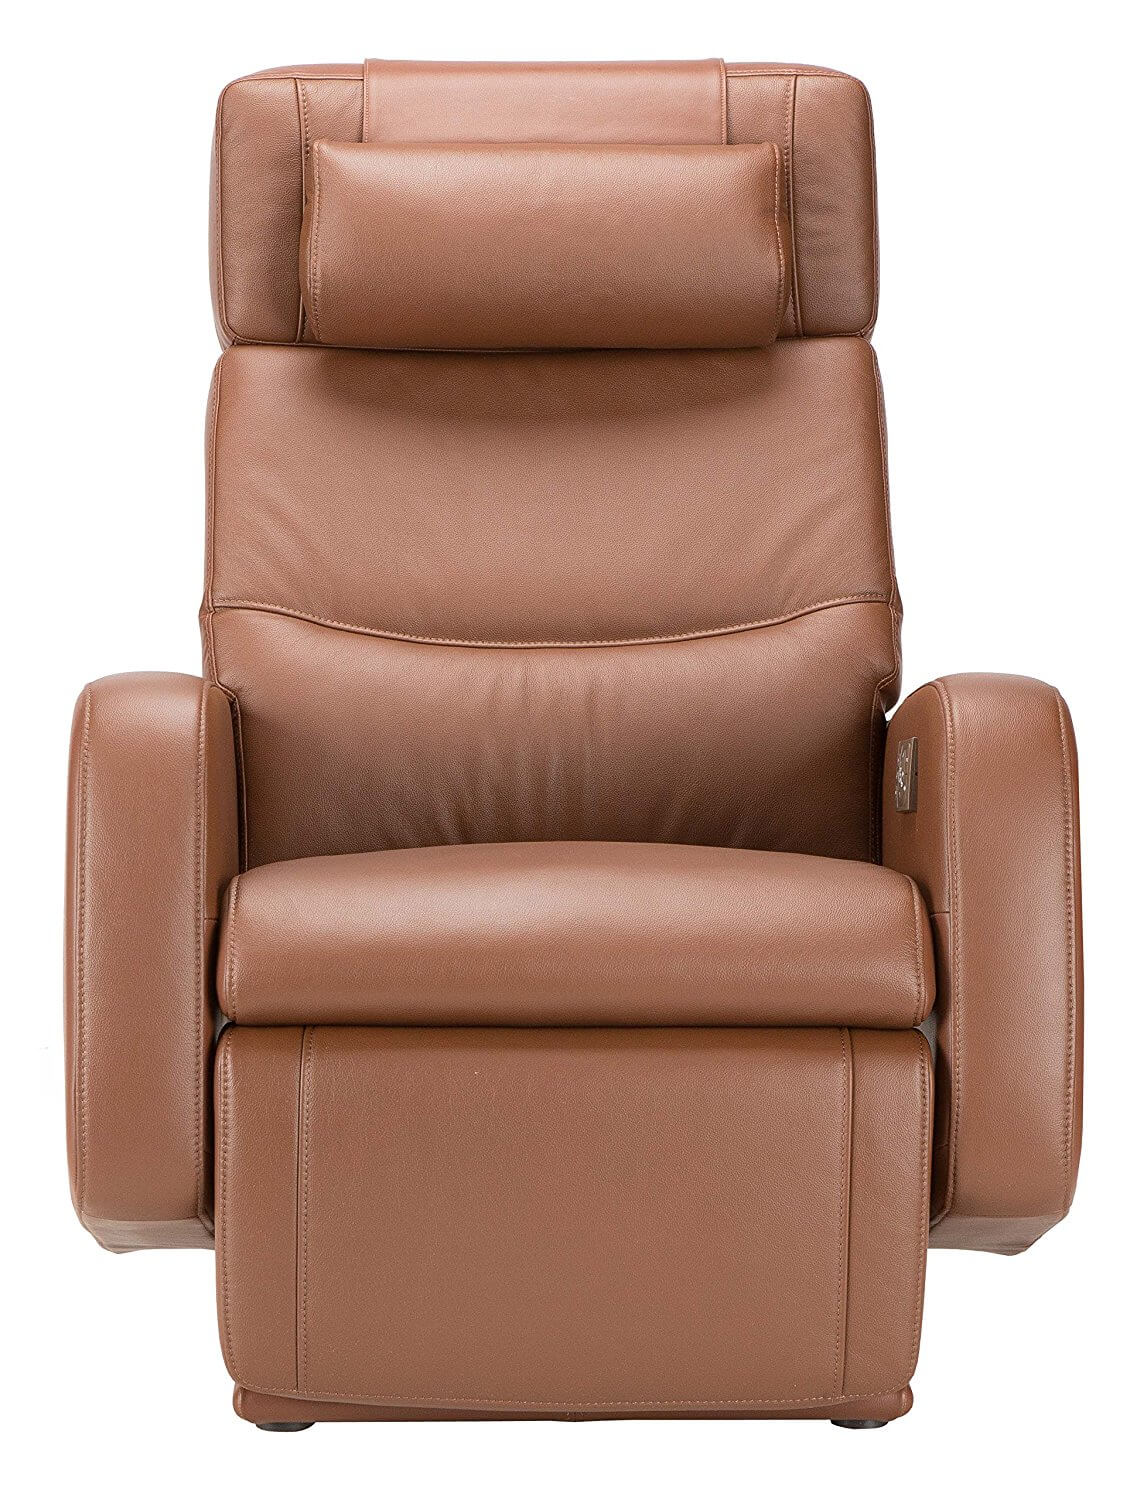 Human Touch Zero-Gravity Chair brown 3